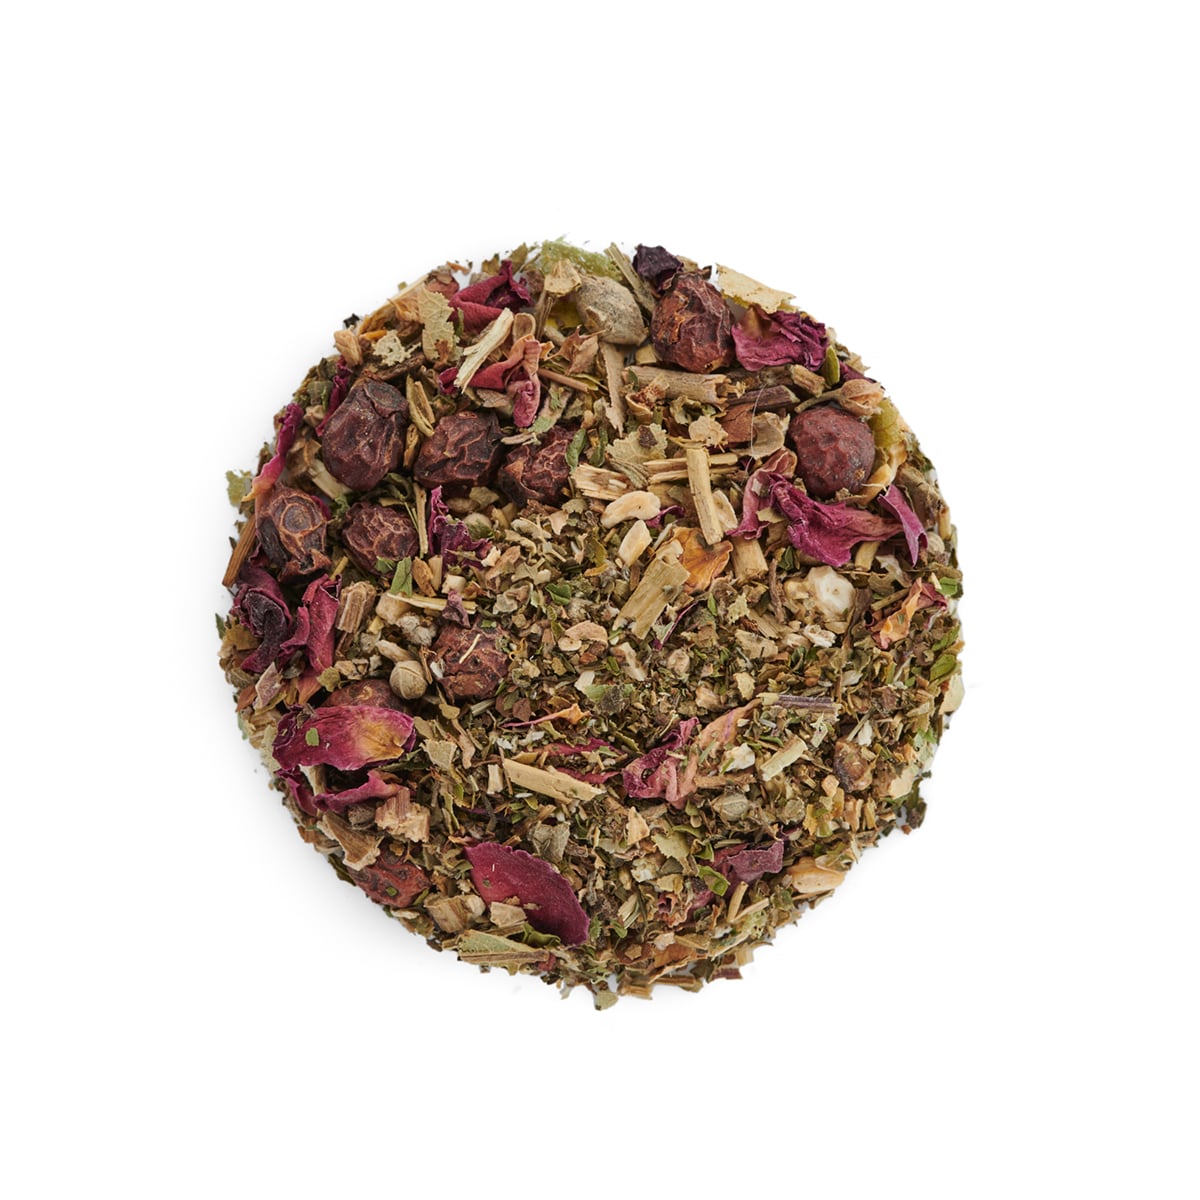 Meno-balance Tea for Menopause (45g)